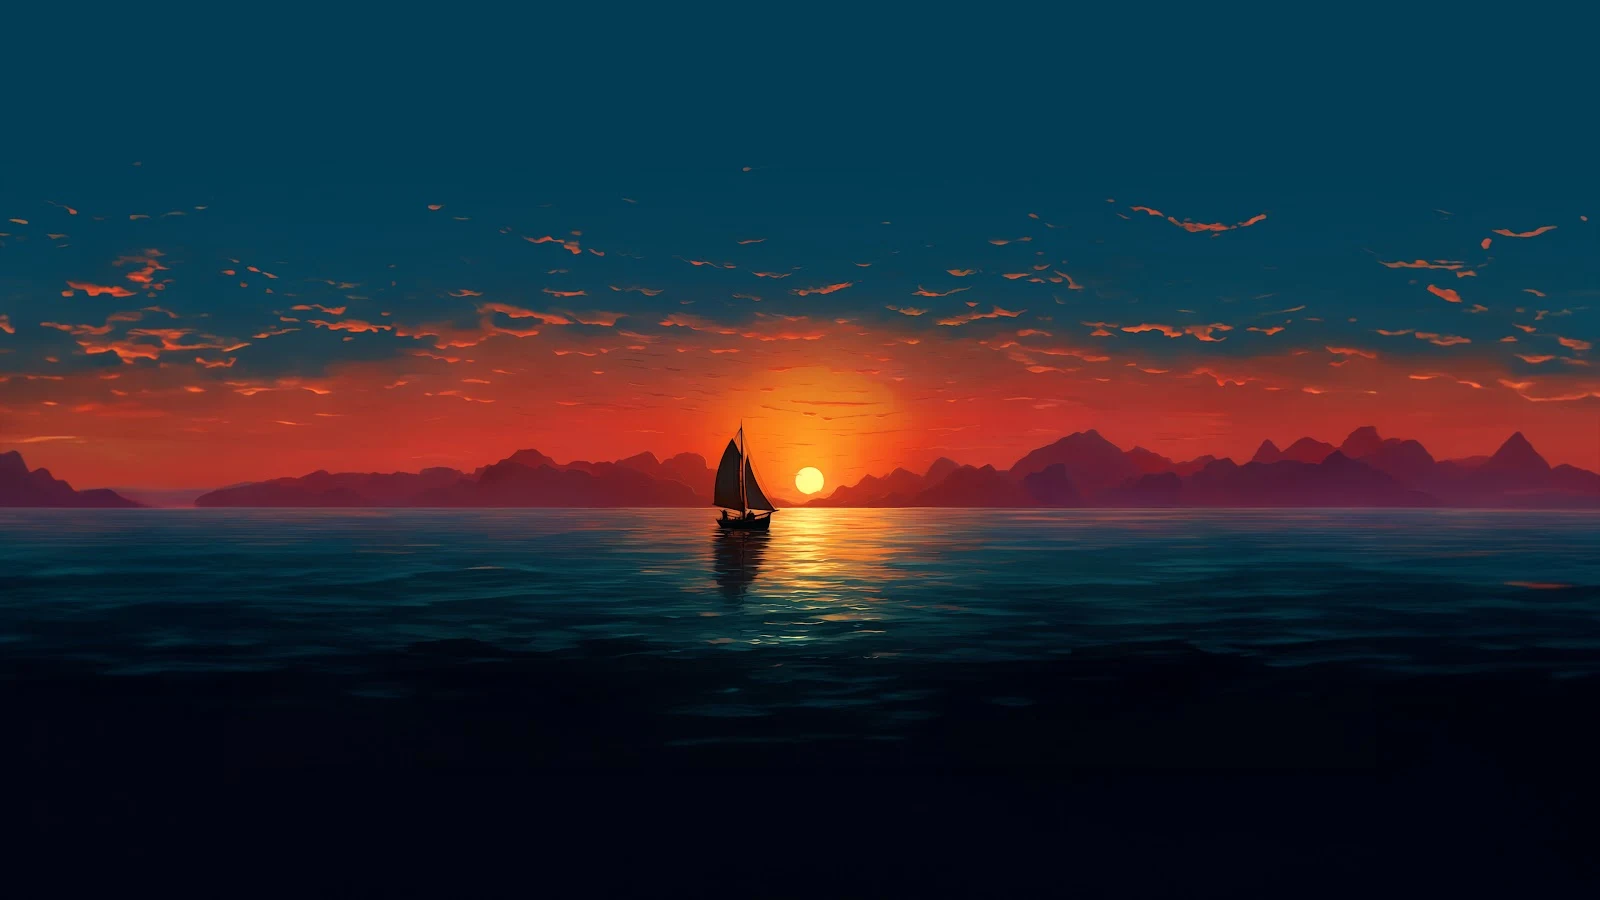 BEAUTIFUL WALLPAPER 4K - SERENE OCEAN SUNSET - FOR PC